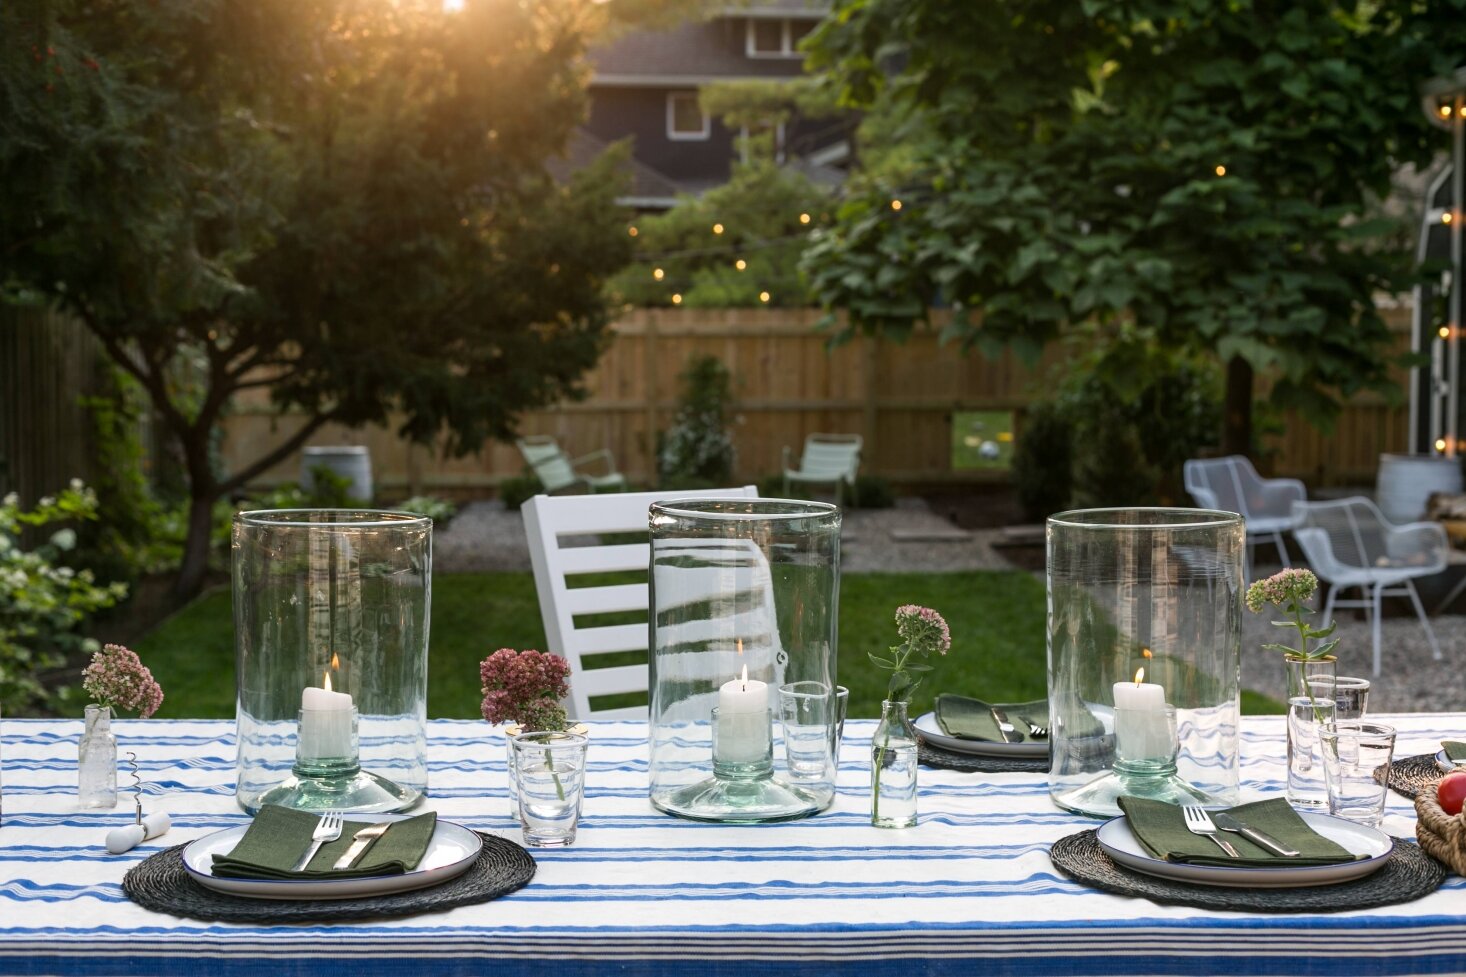 outdoor-dining-patio-michelle-adams-ann-arbor-michigan-by-marta-xochilt-perez-1466x977.jpg